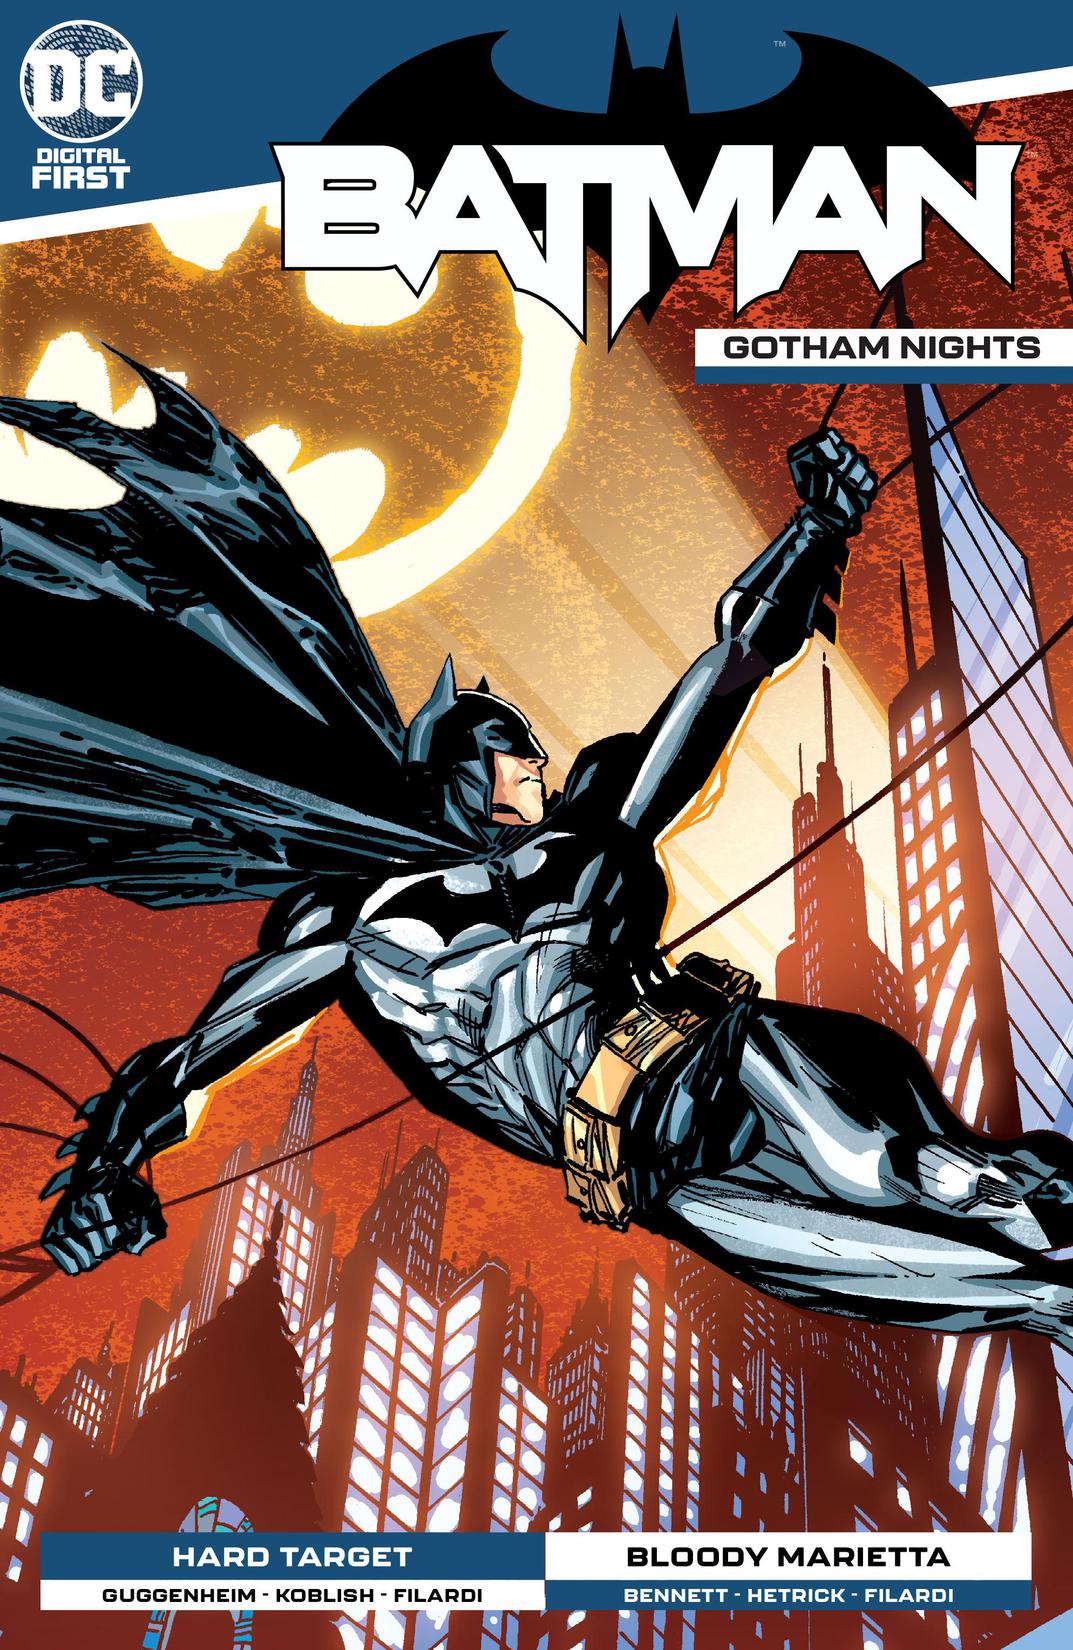 Batman: Gotham Nights #18 preview images